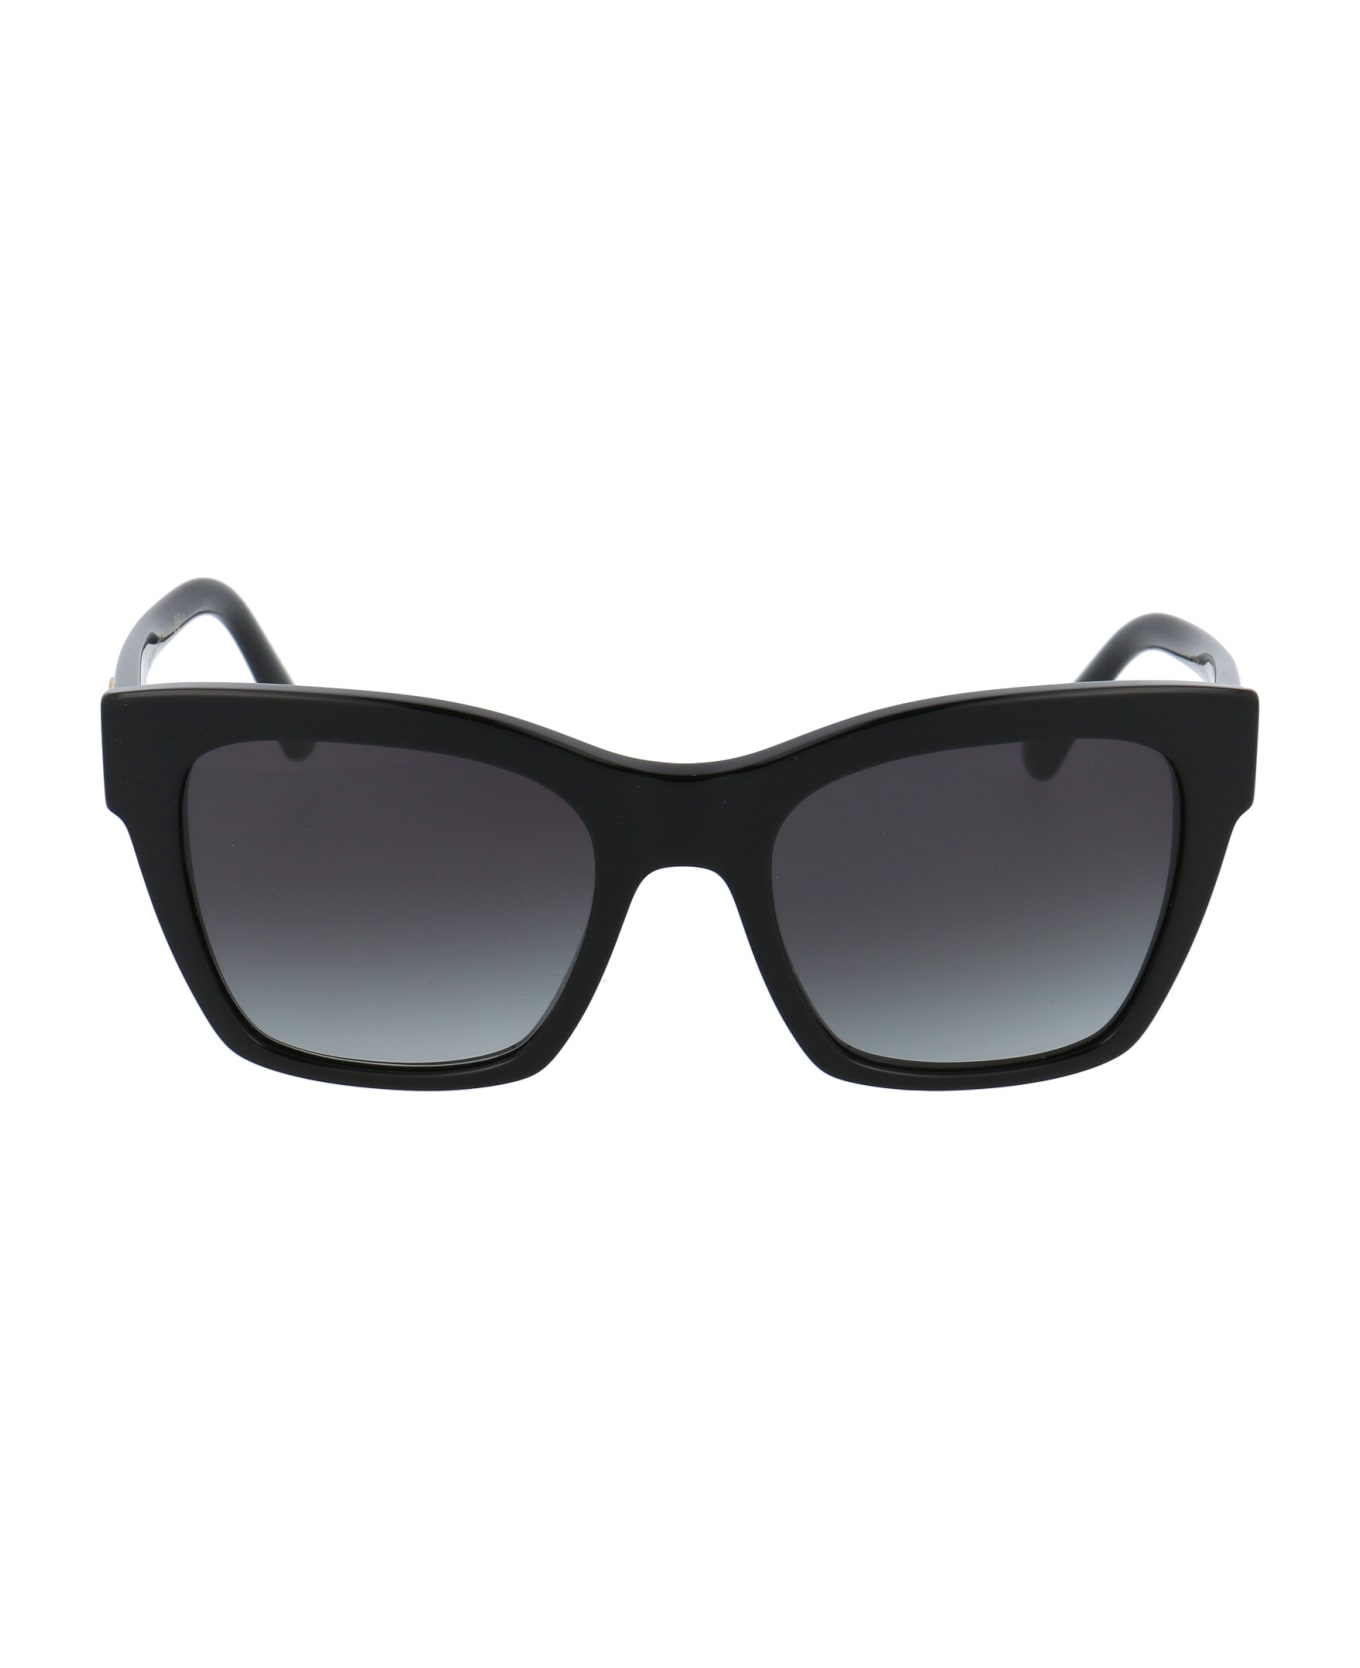 Dolce & Gabbana Eyewear 0dg4384 Sunglasses - 501/8G BLACK